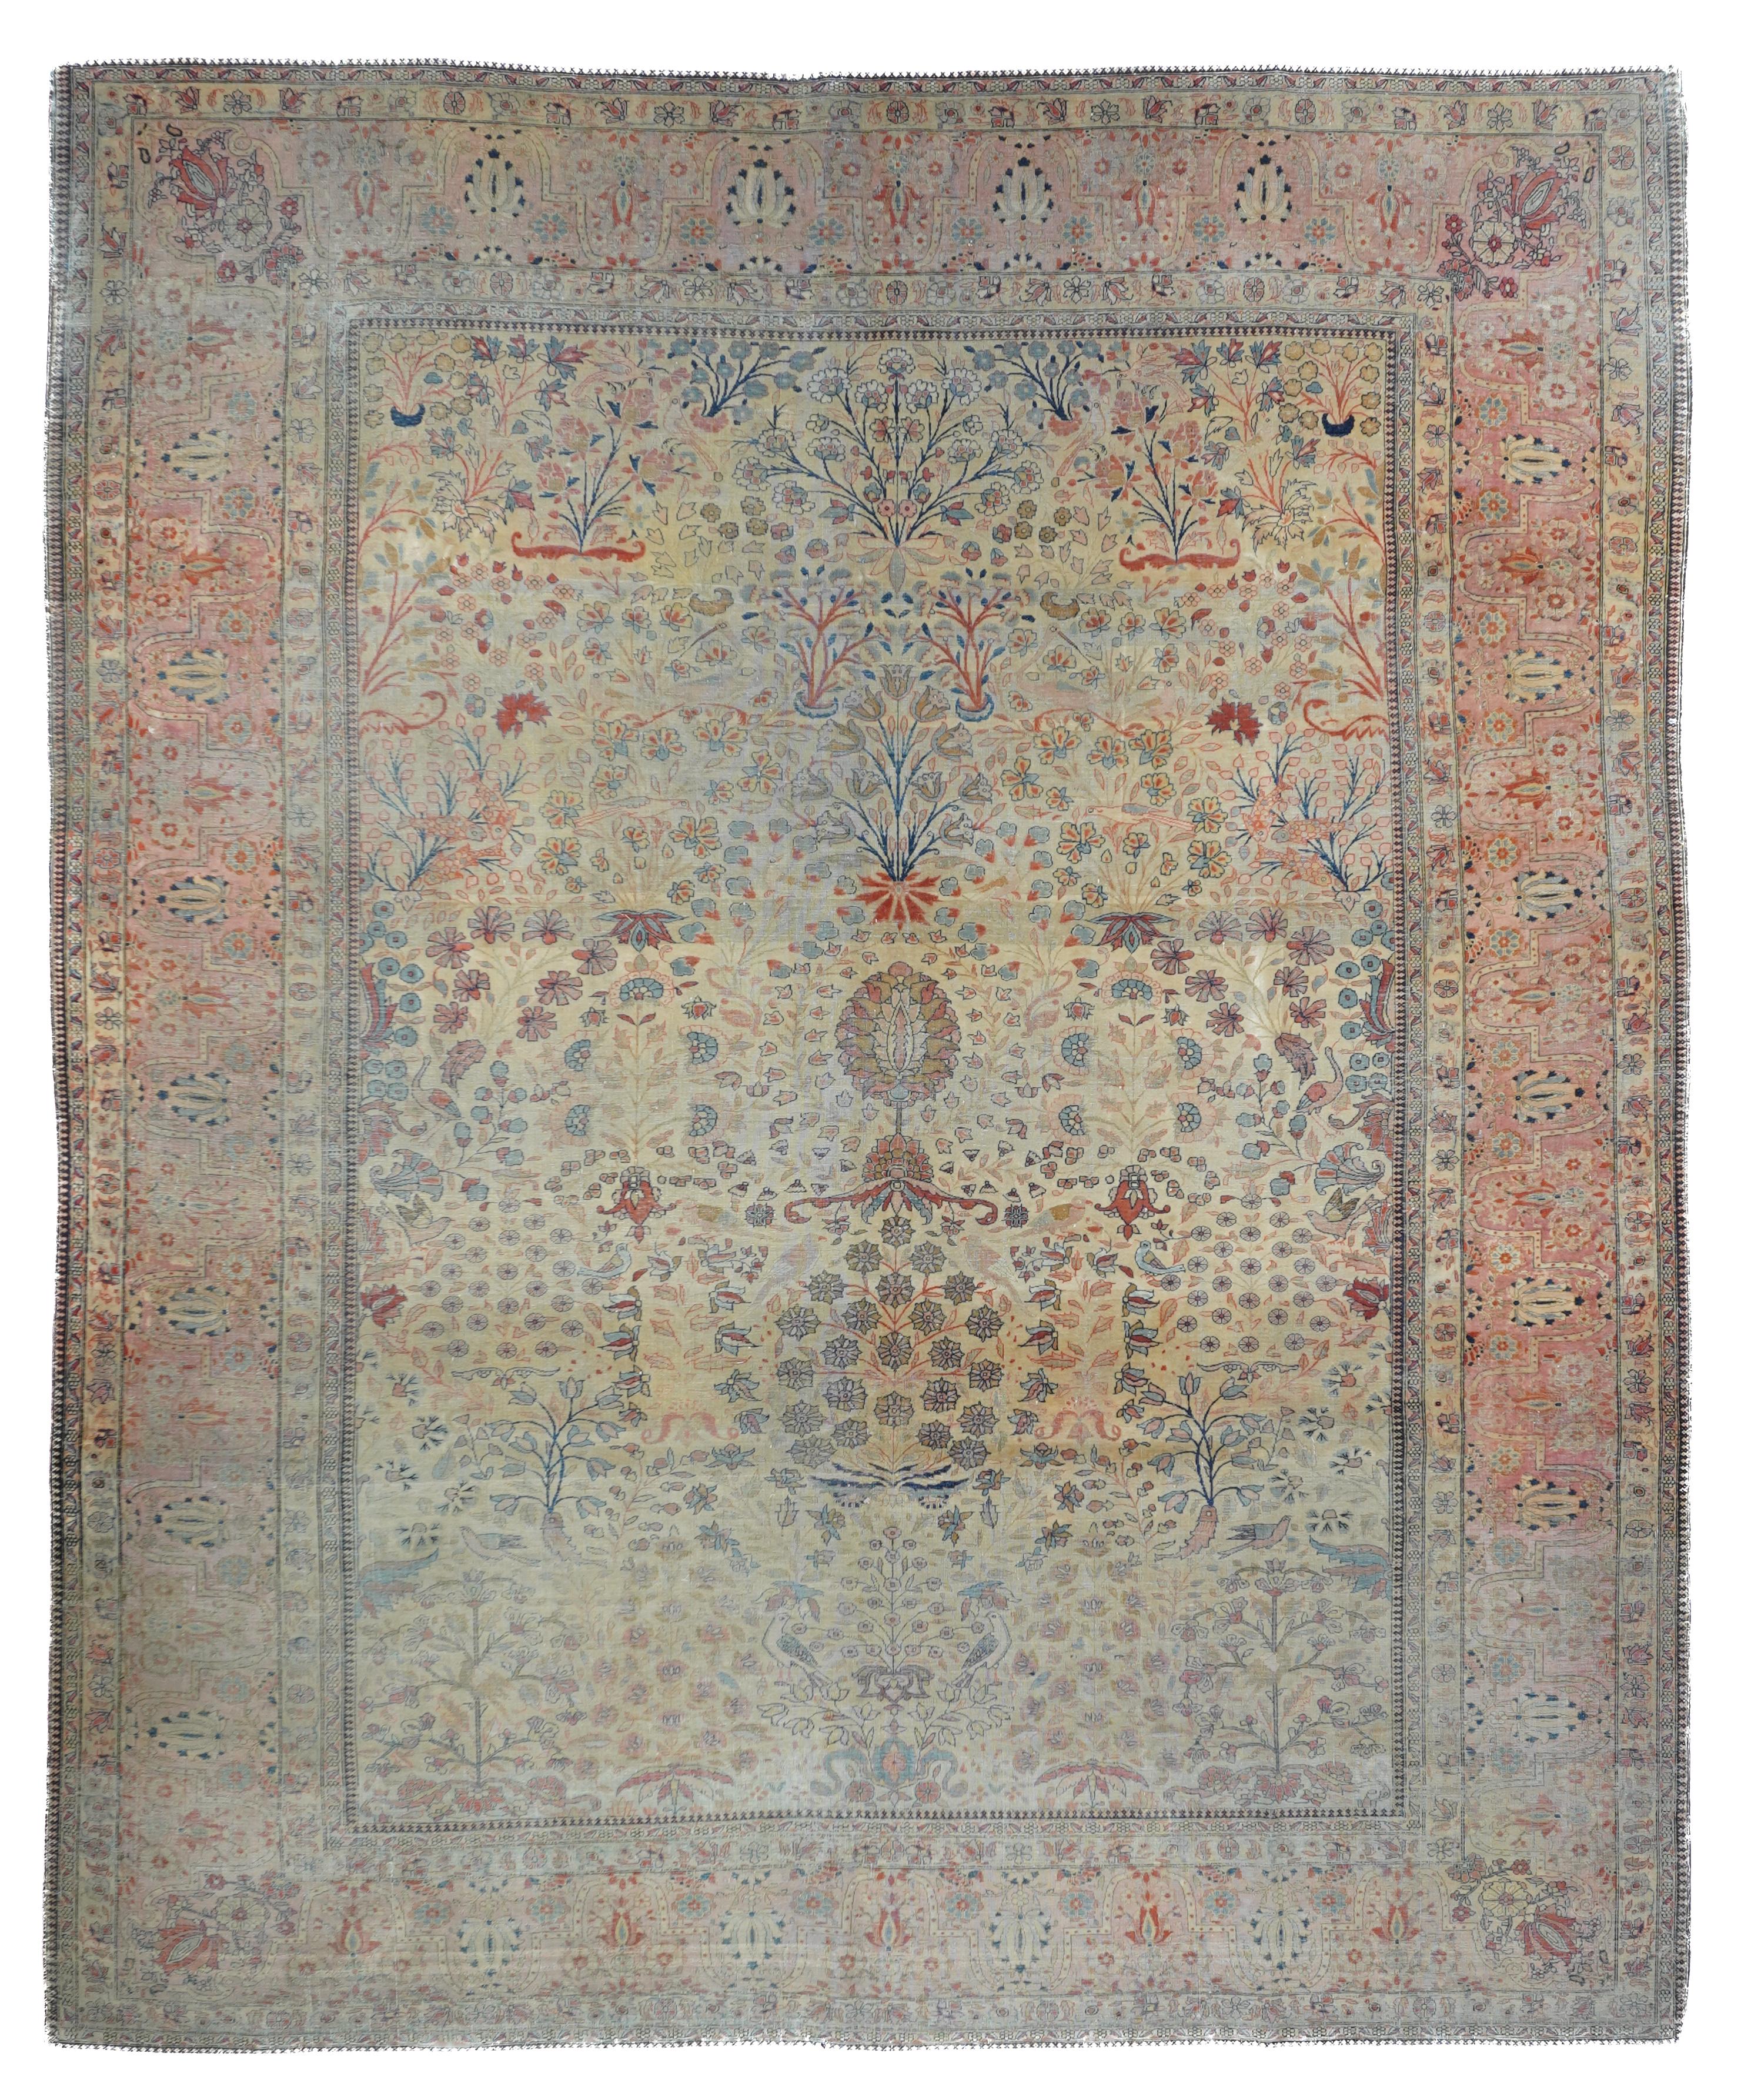 Antique Mohtasham Kashan rug measures: 7.8'' x 9.2''.